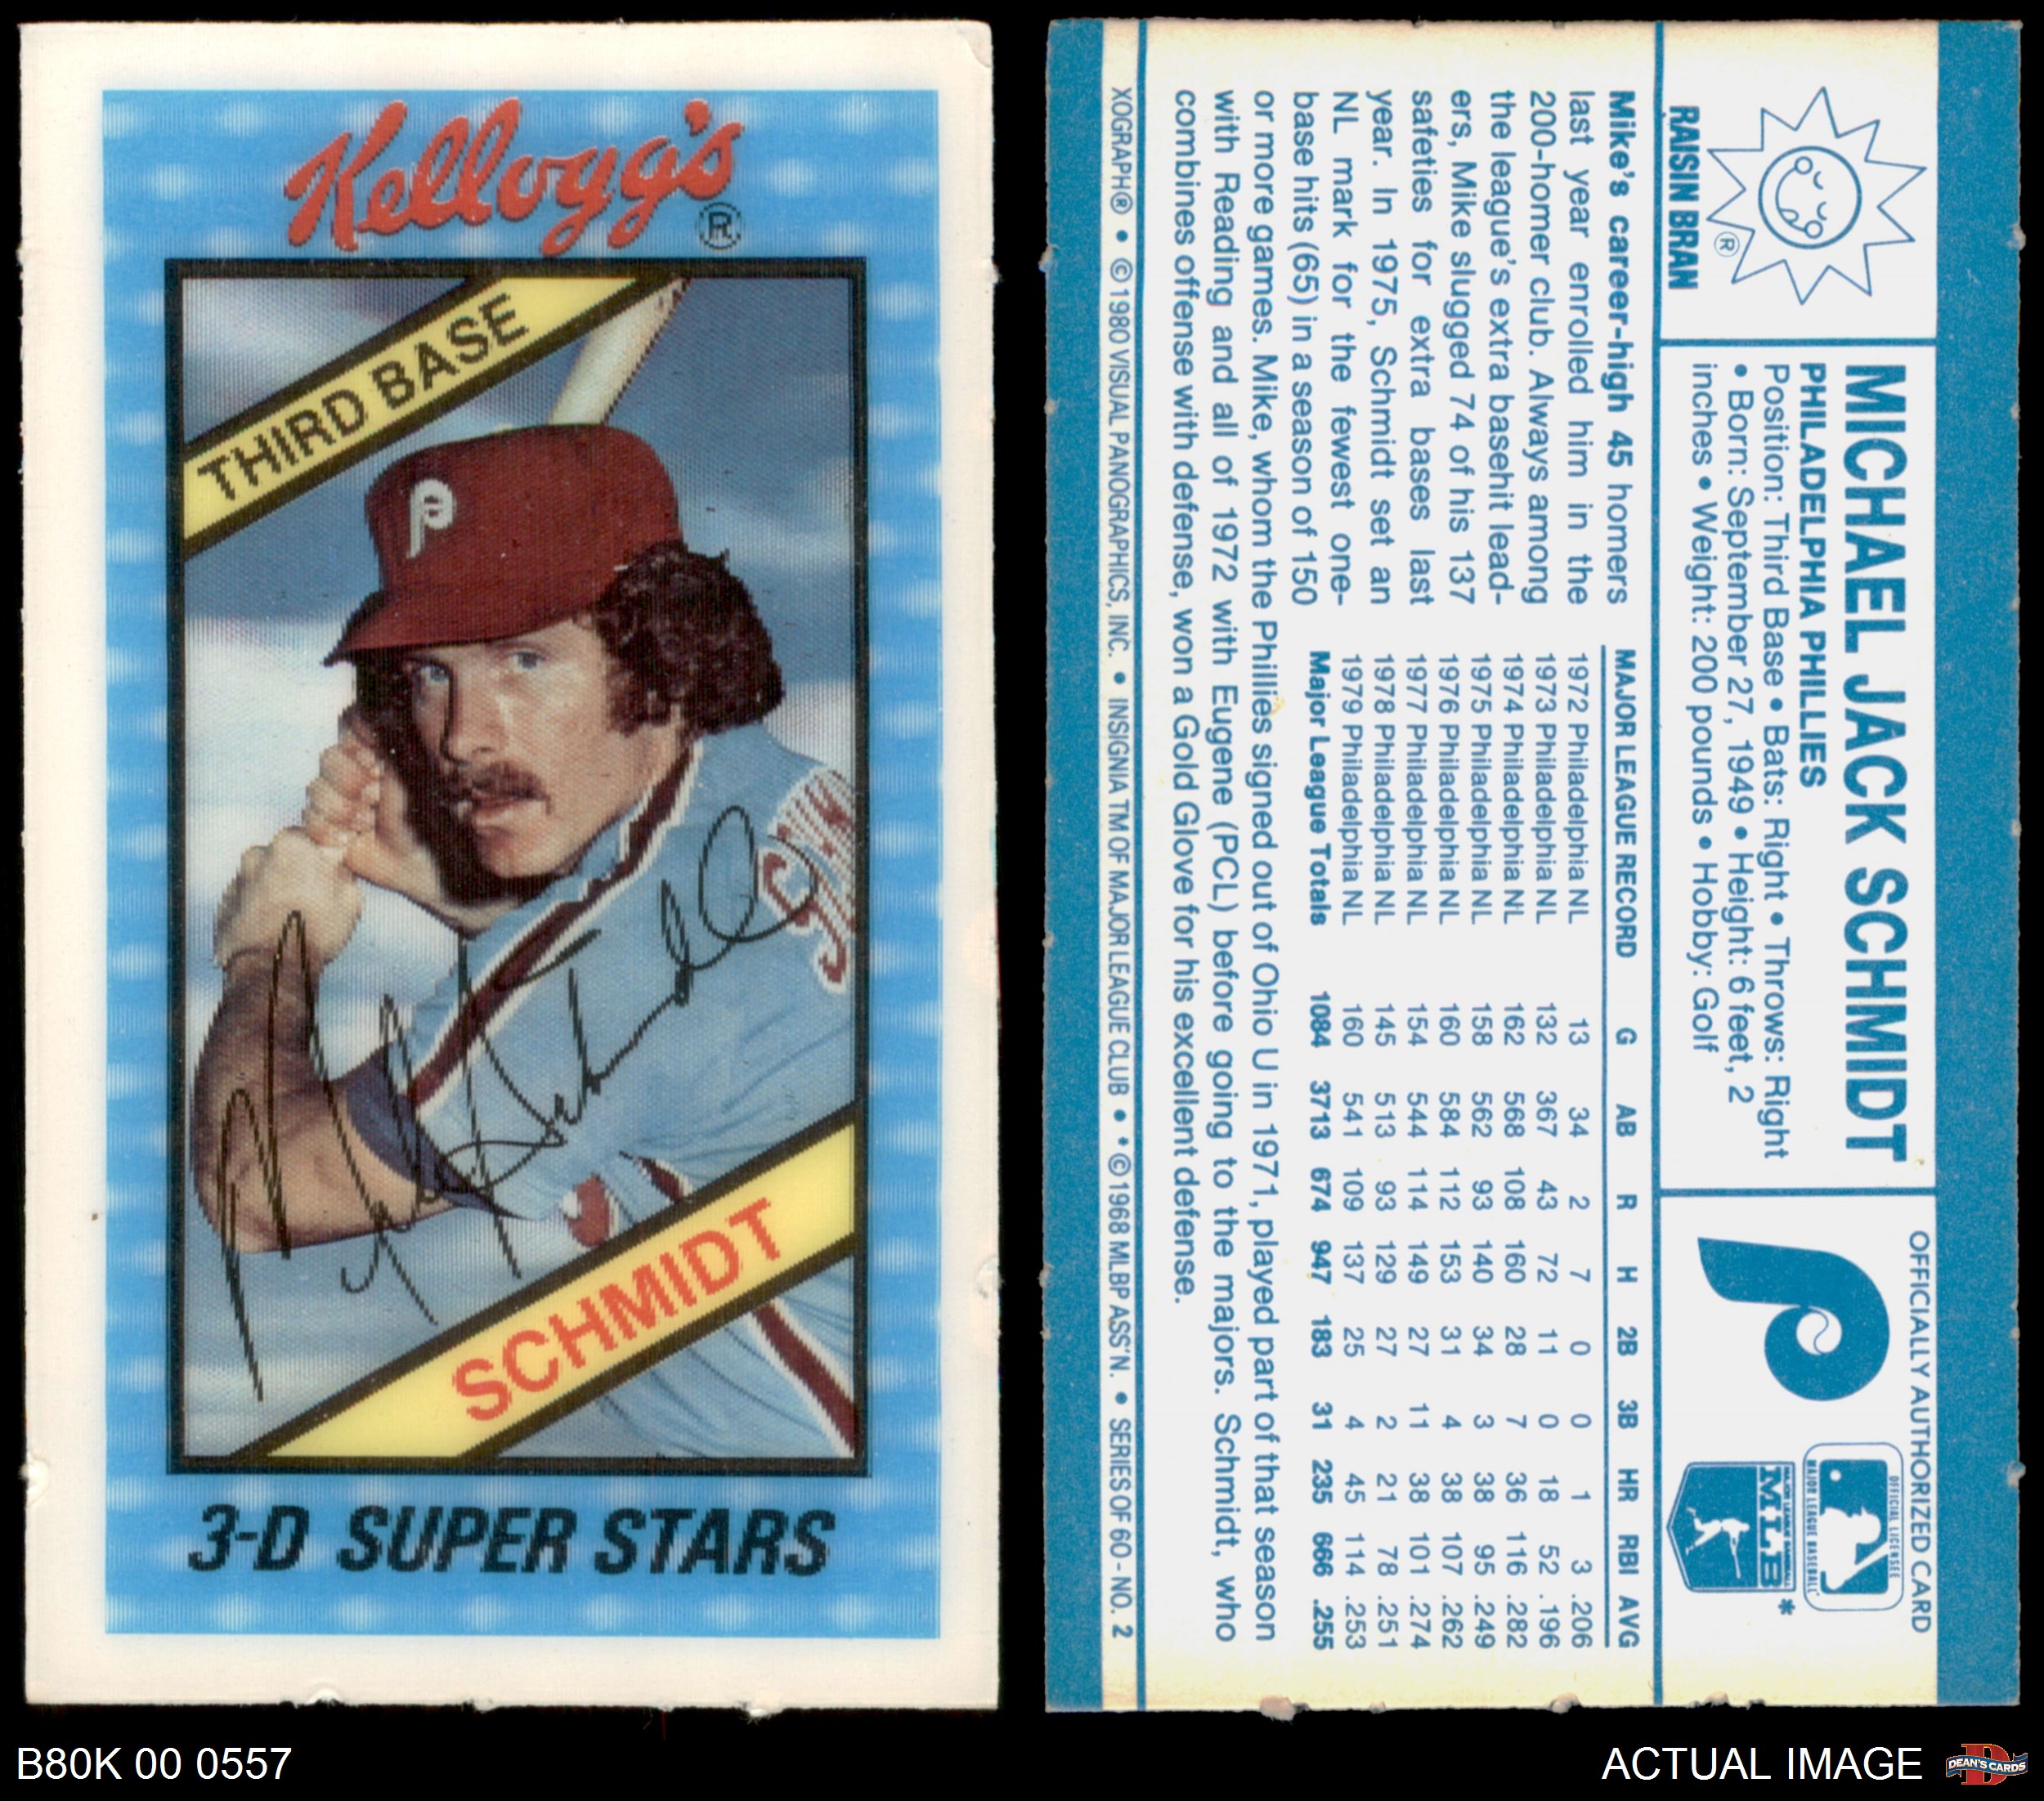 1980 Mike Schmidt #2  Kellogg's Baseball Card Unopened In Original Wrapper RARE 